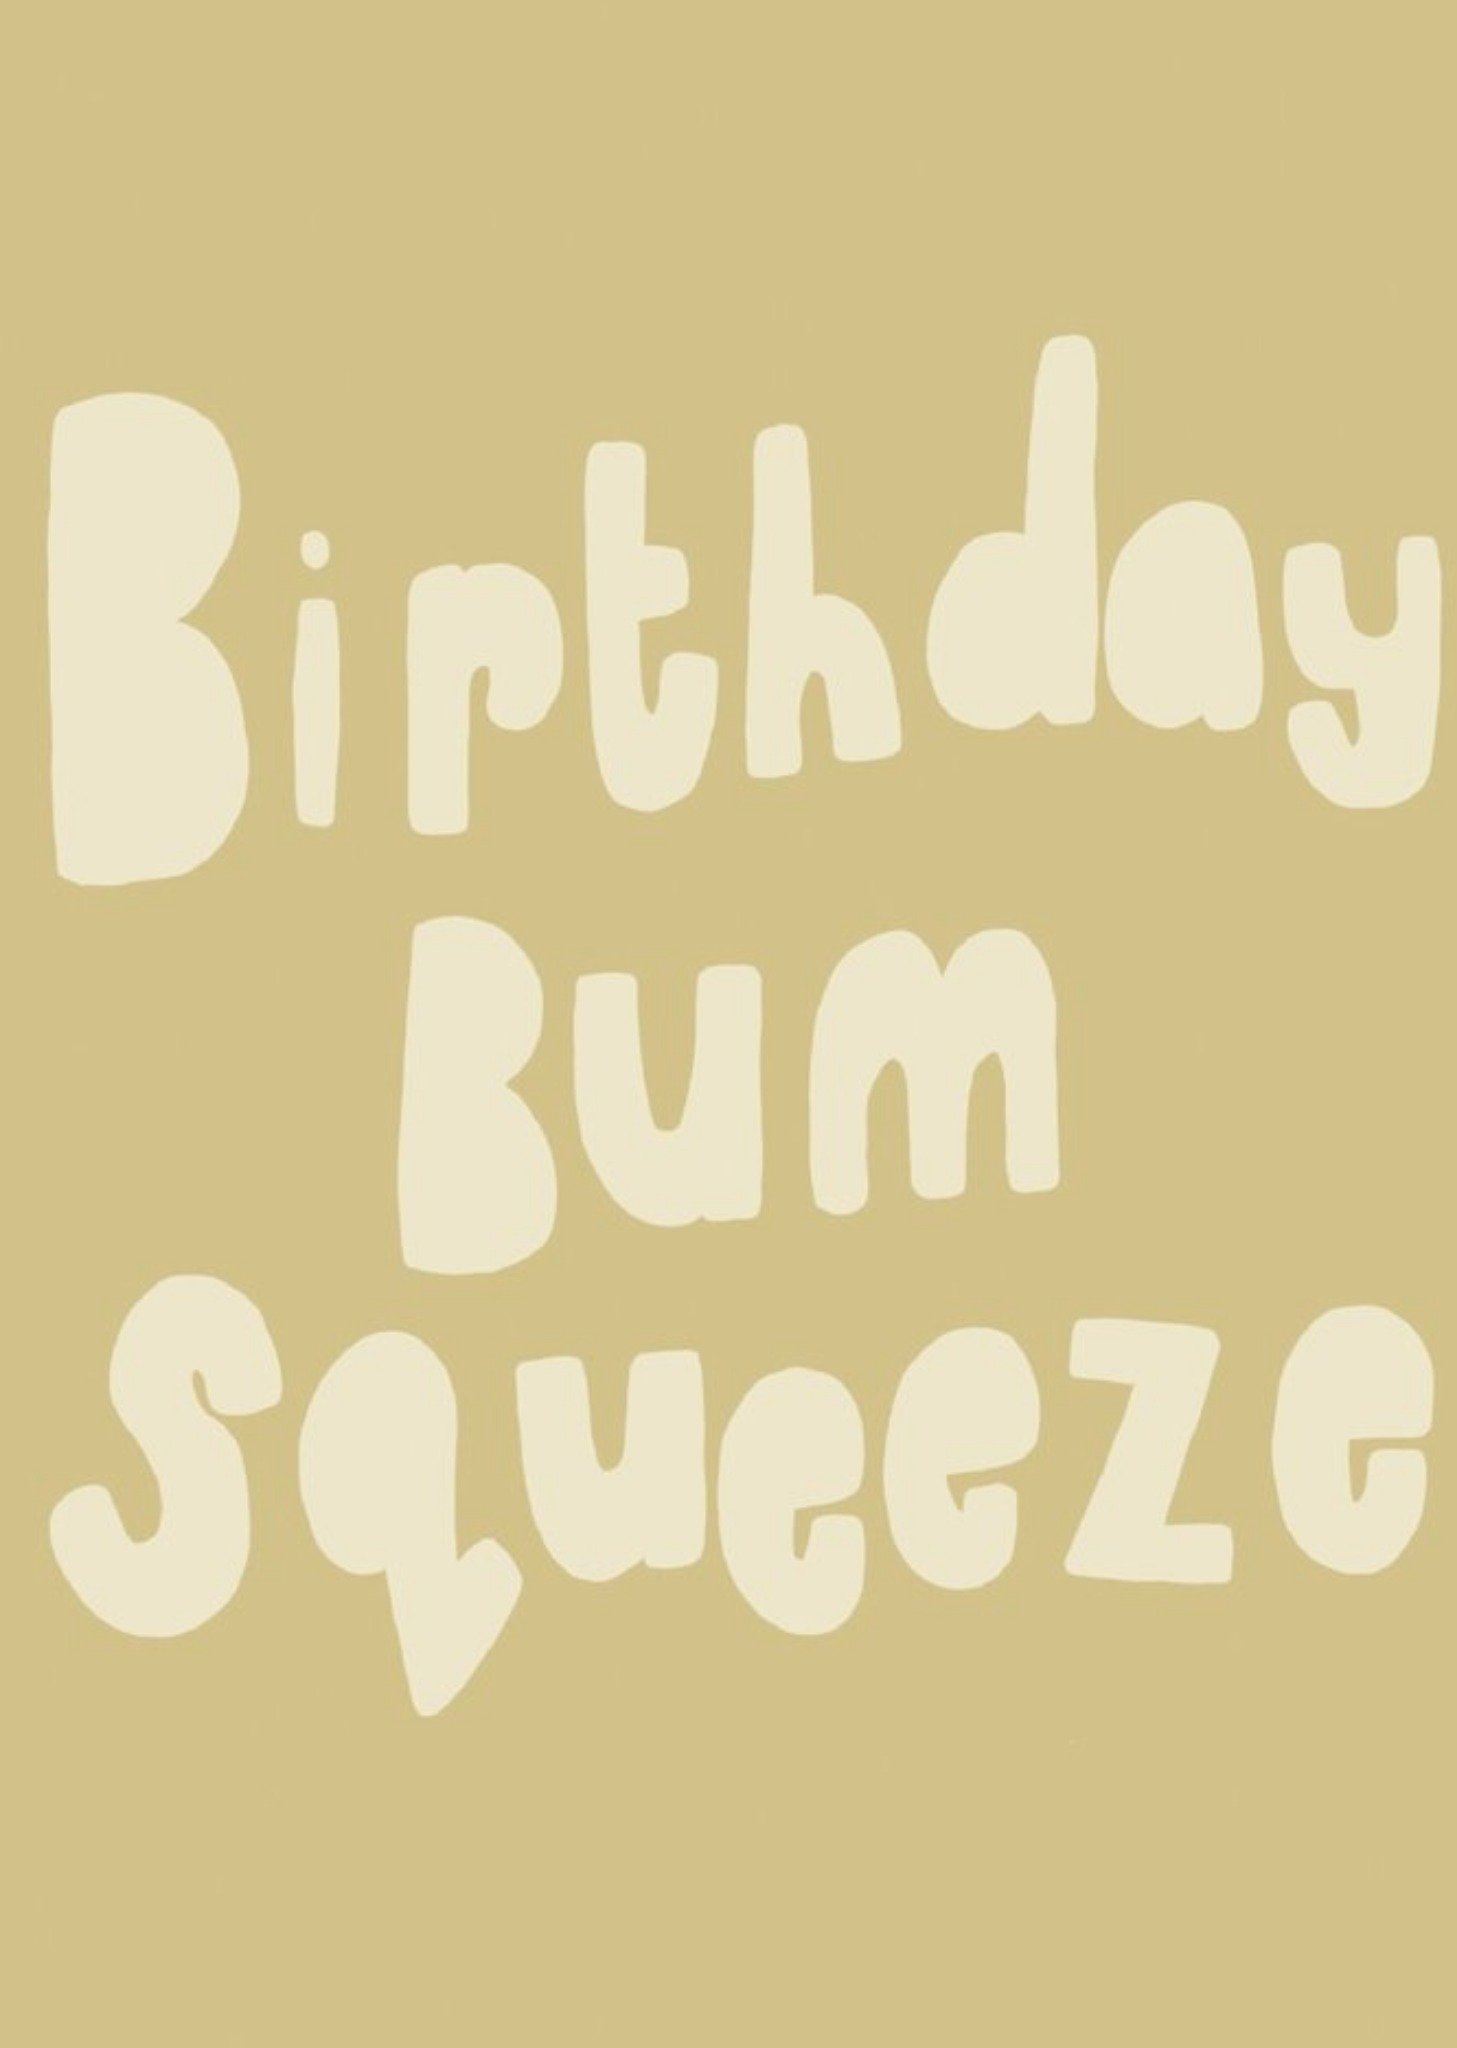 Sooshichacha Birthday Bum Squeeze Card, Large